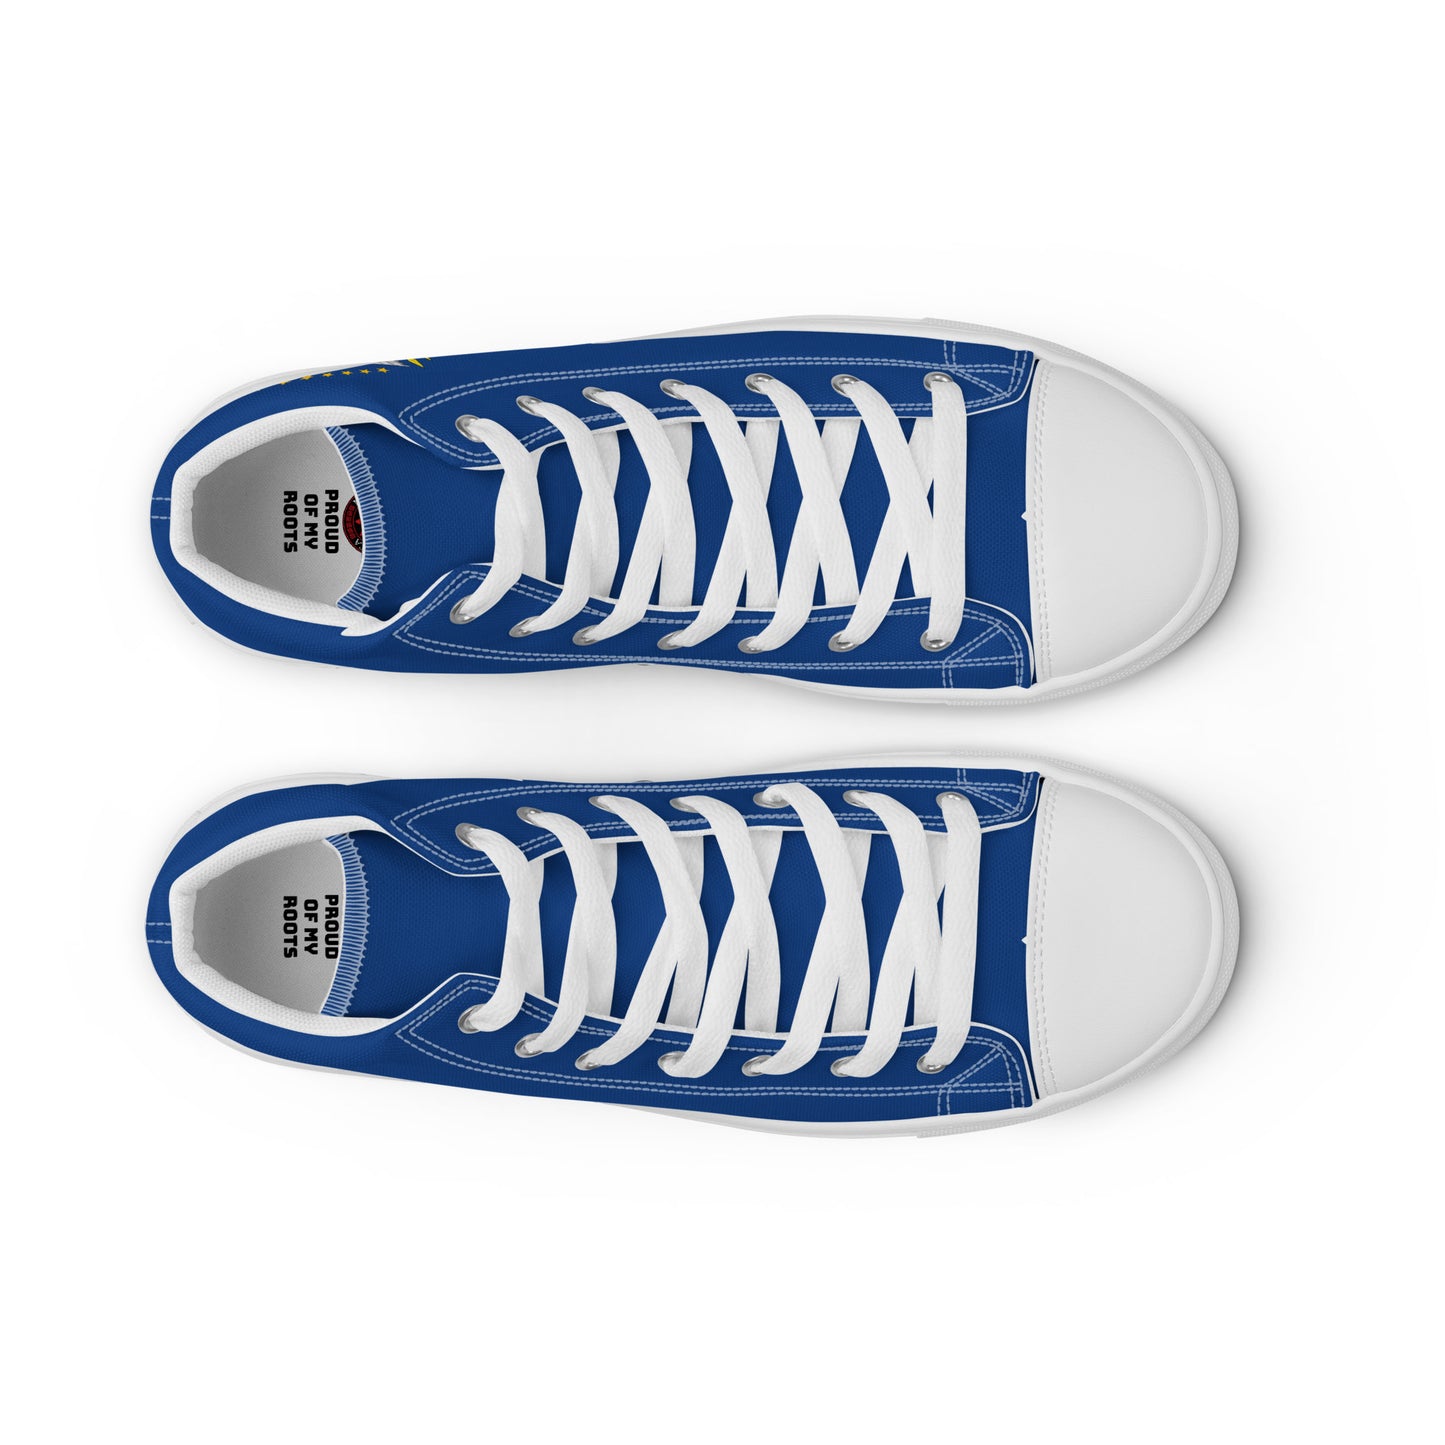 Panamá - Men - Blue - High top shoes